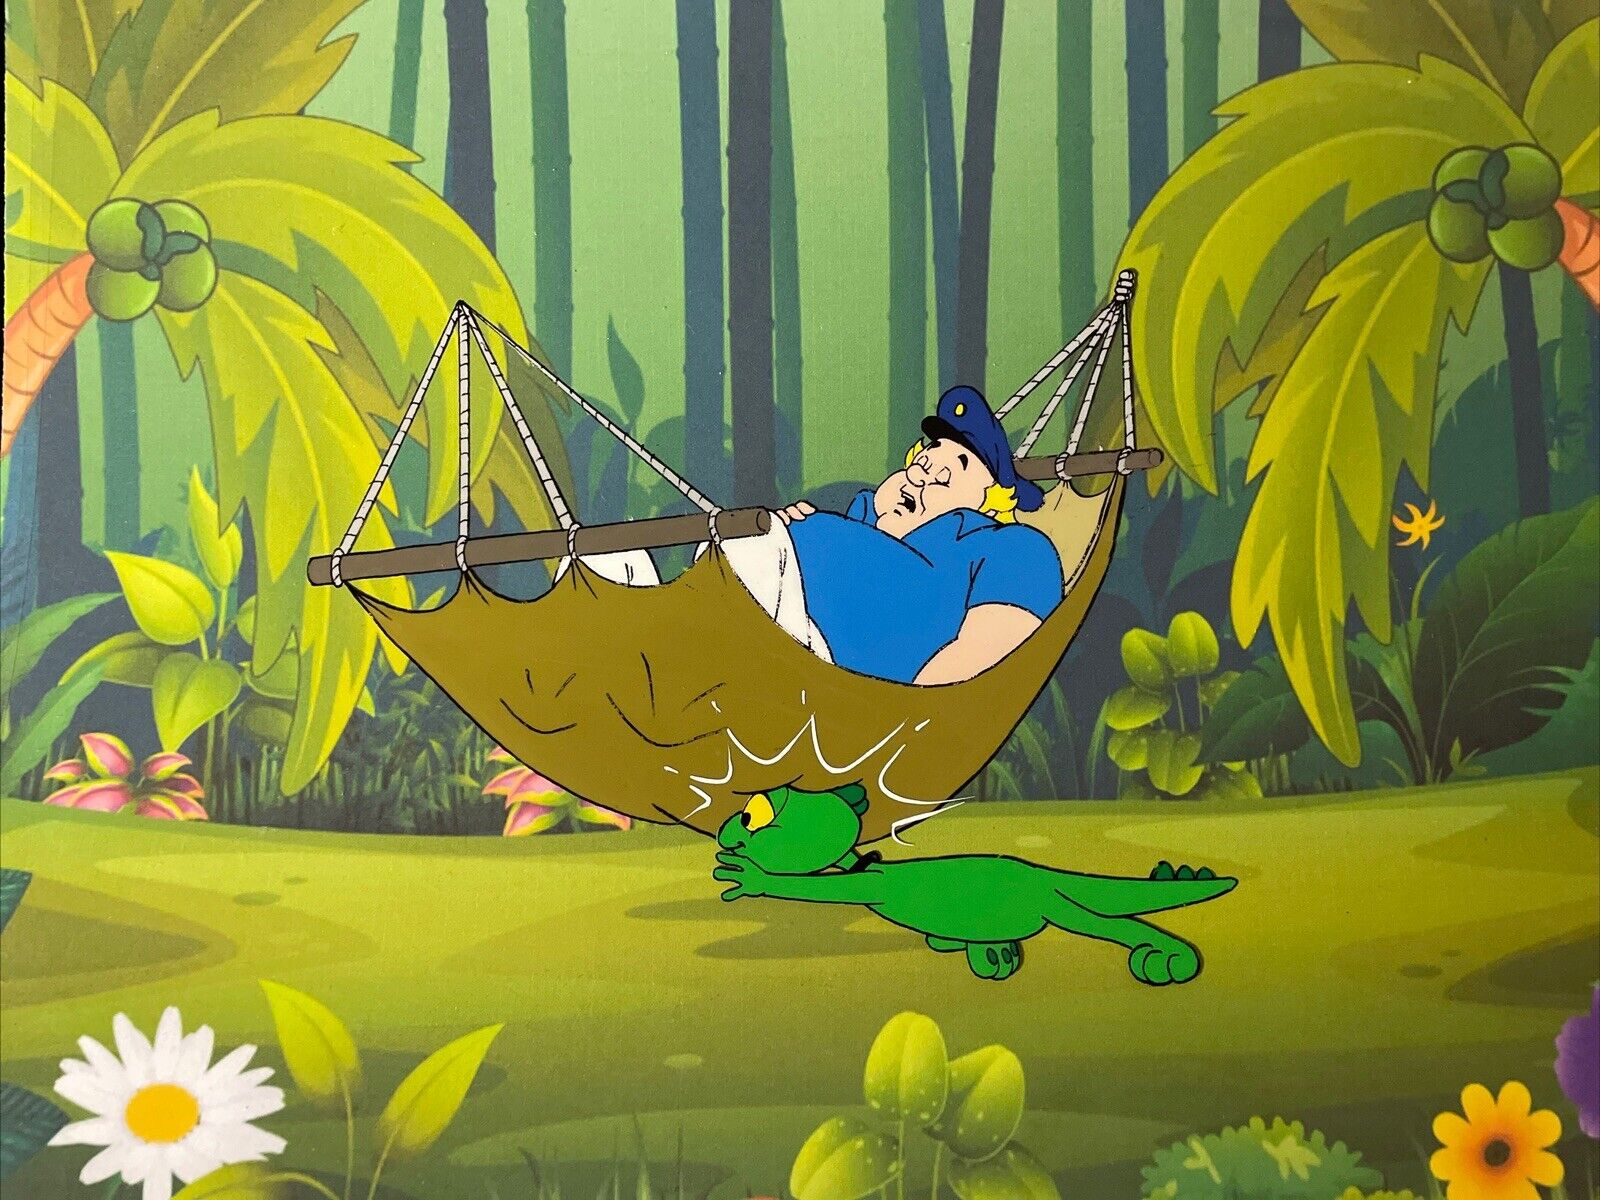 Gilligan’s Island Animation Cel “ The New Adventures Of Gilligan” Cartoon I16